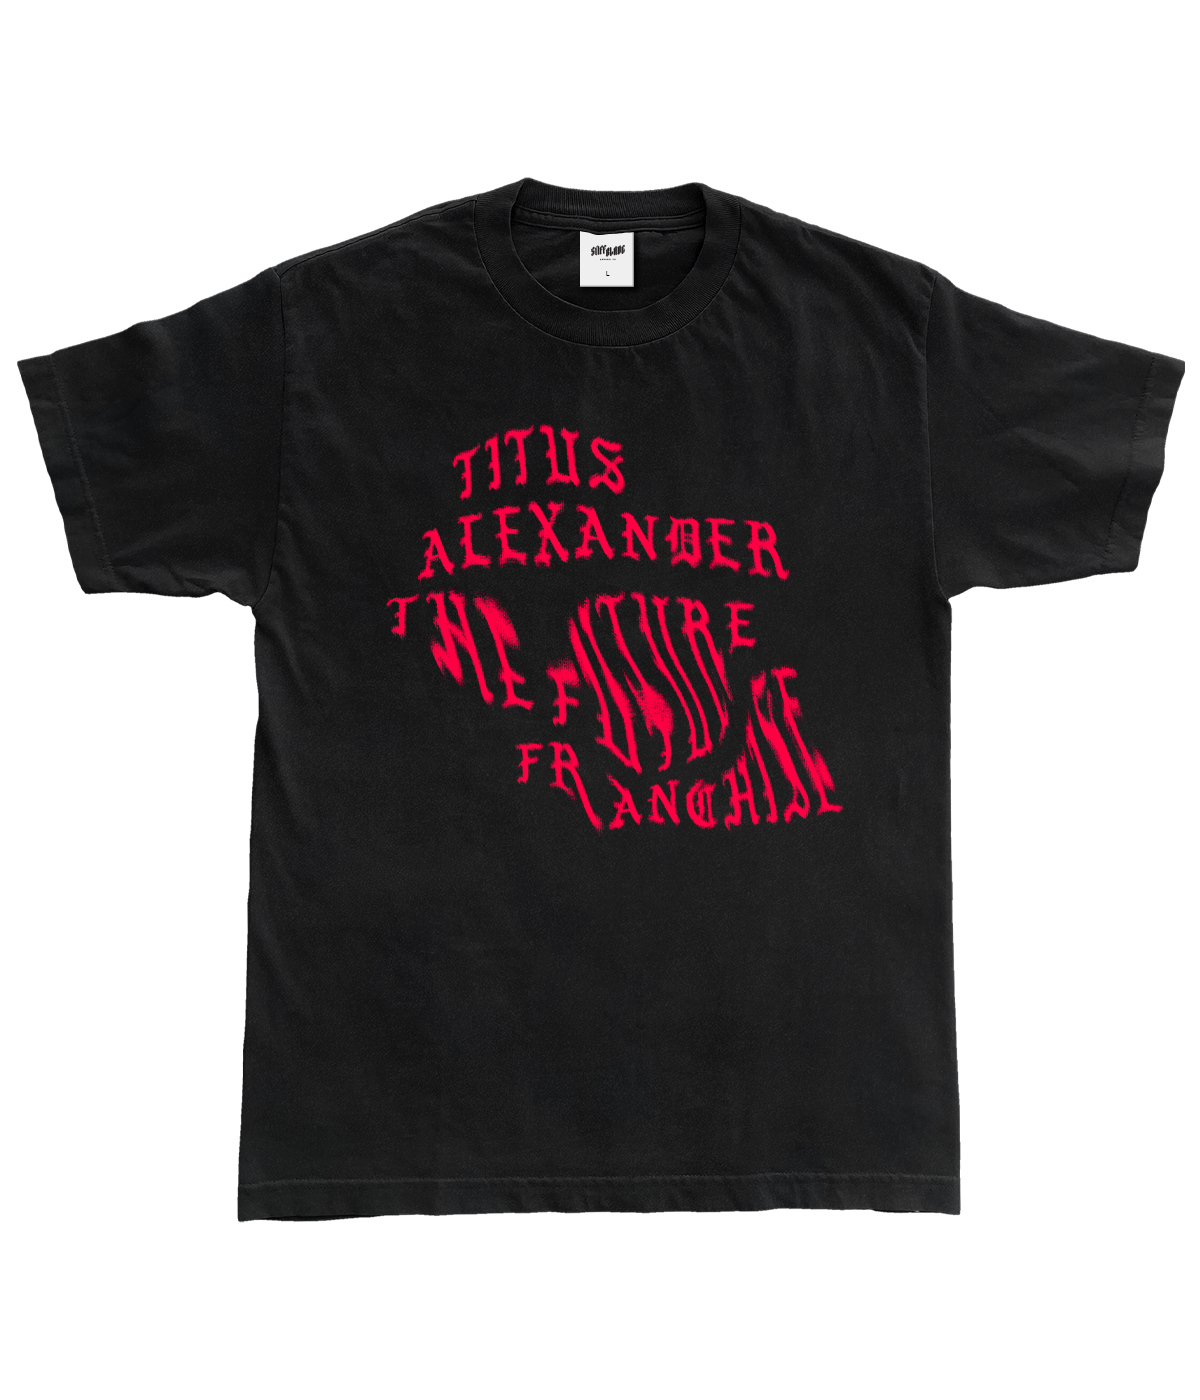 Titus Alexander - The Future Franchise Shirt